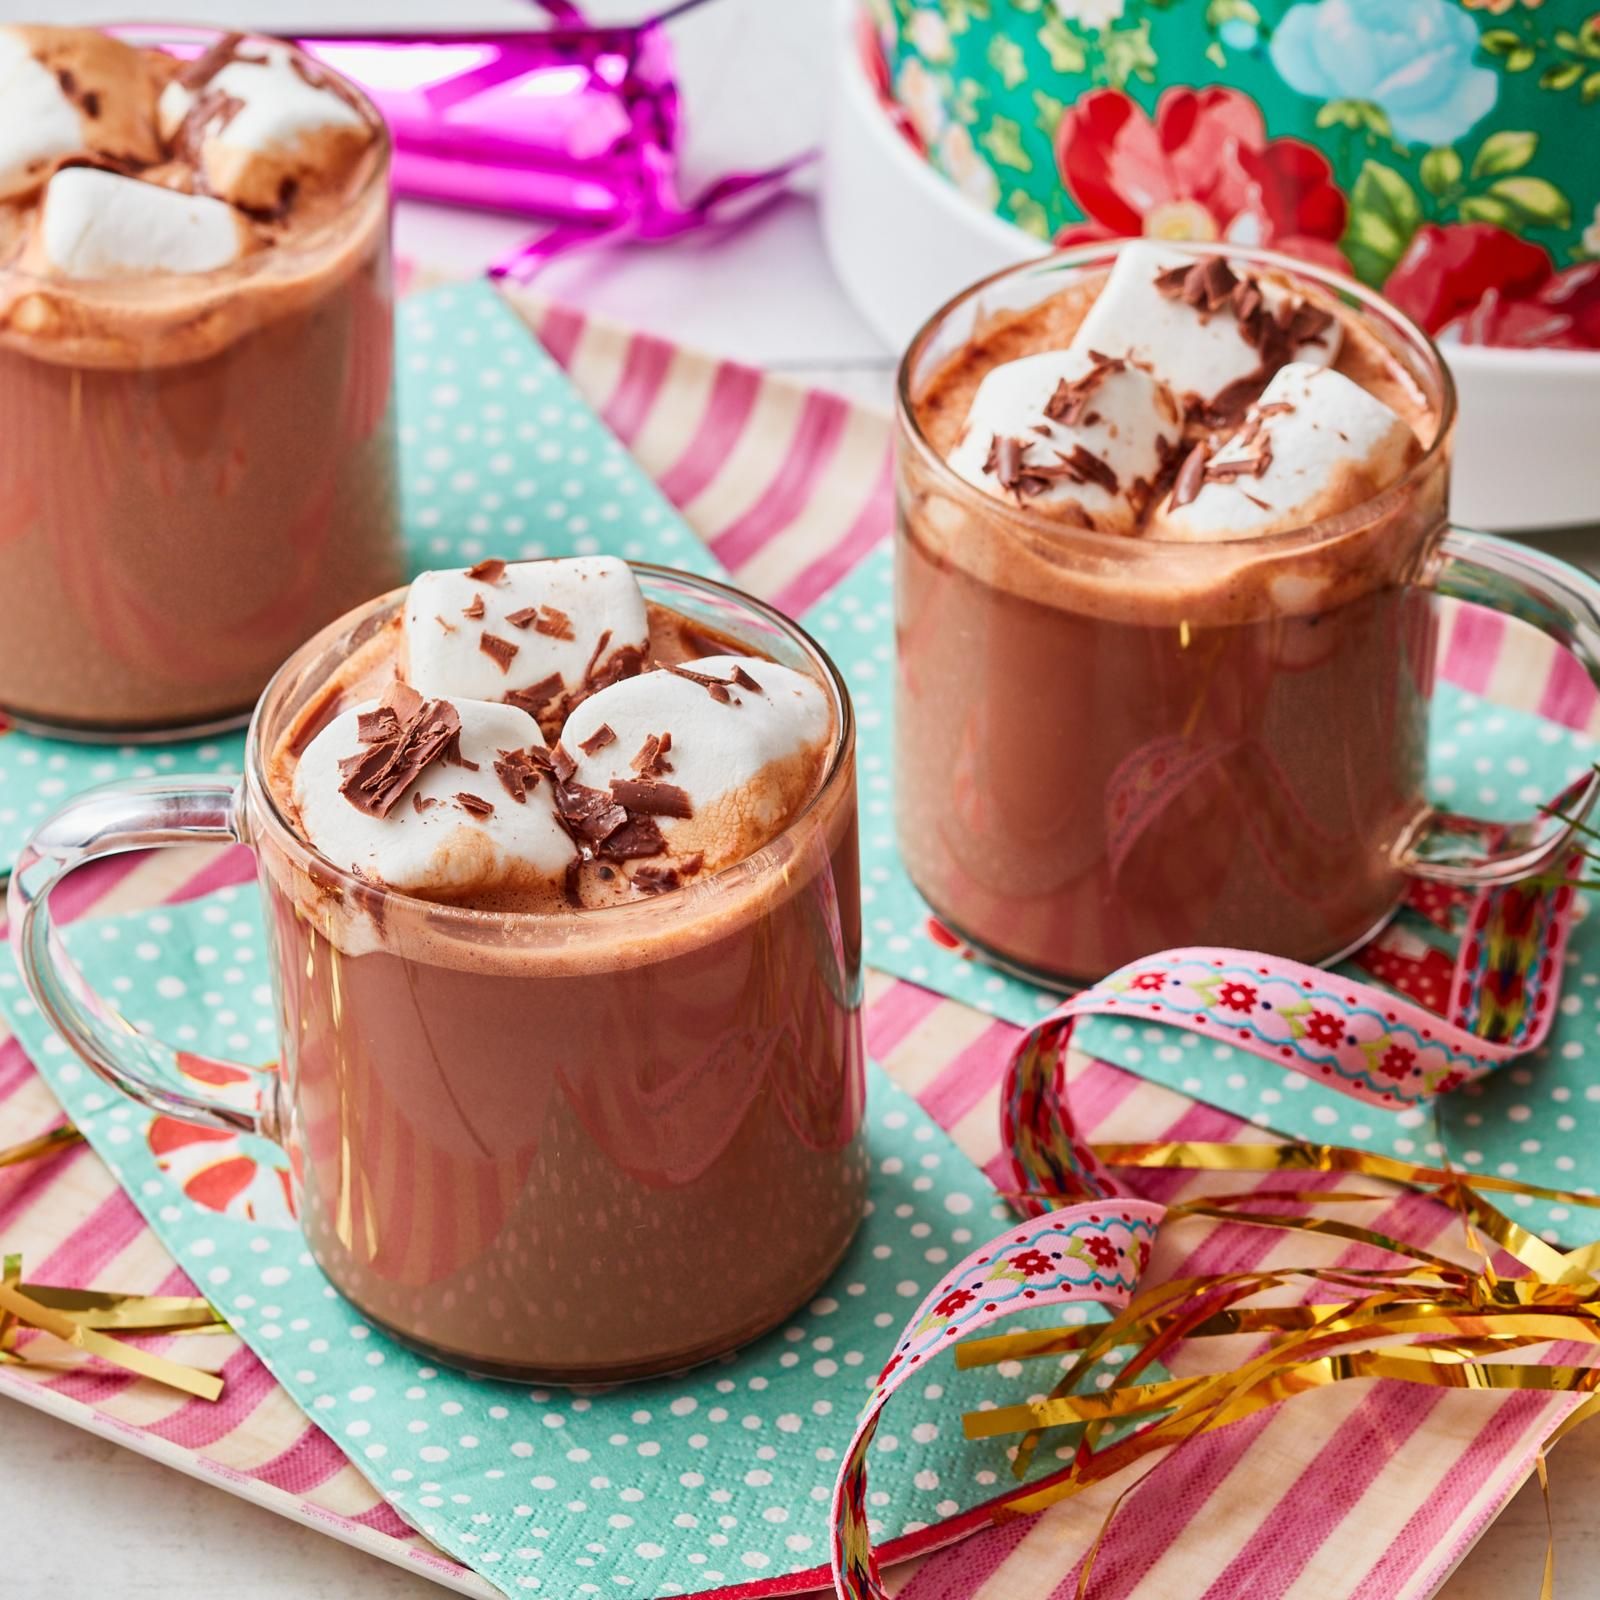 Crock-Pot Thick & Creamy Hot Chocolate + Video - Crock-Pot Ladies